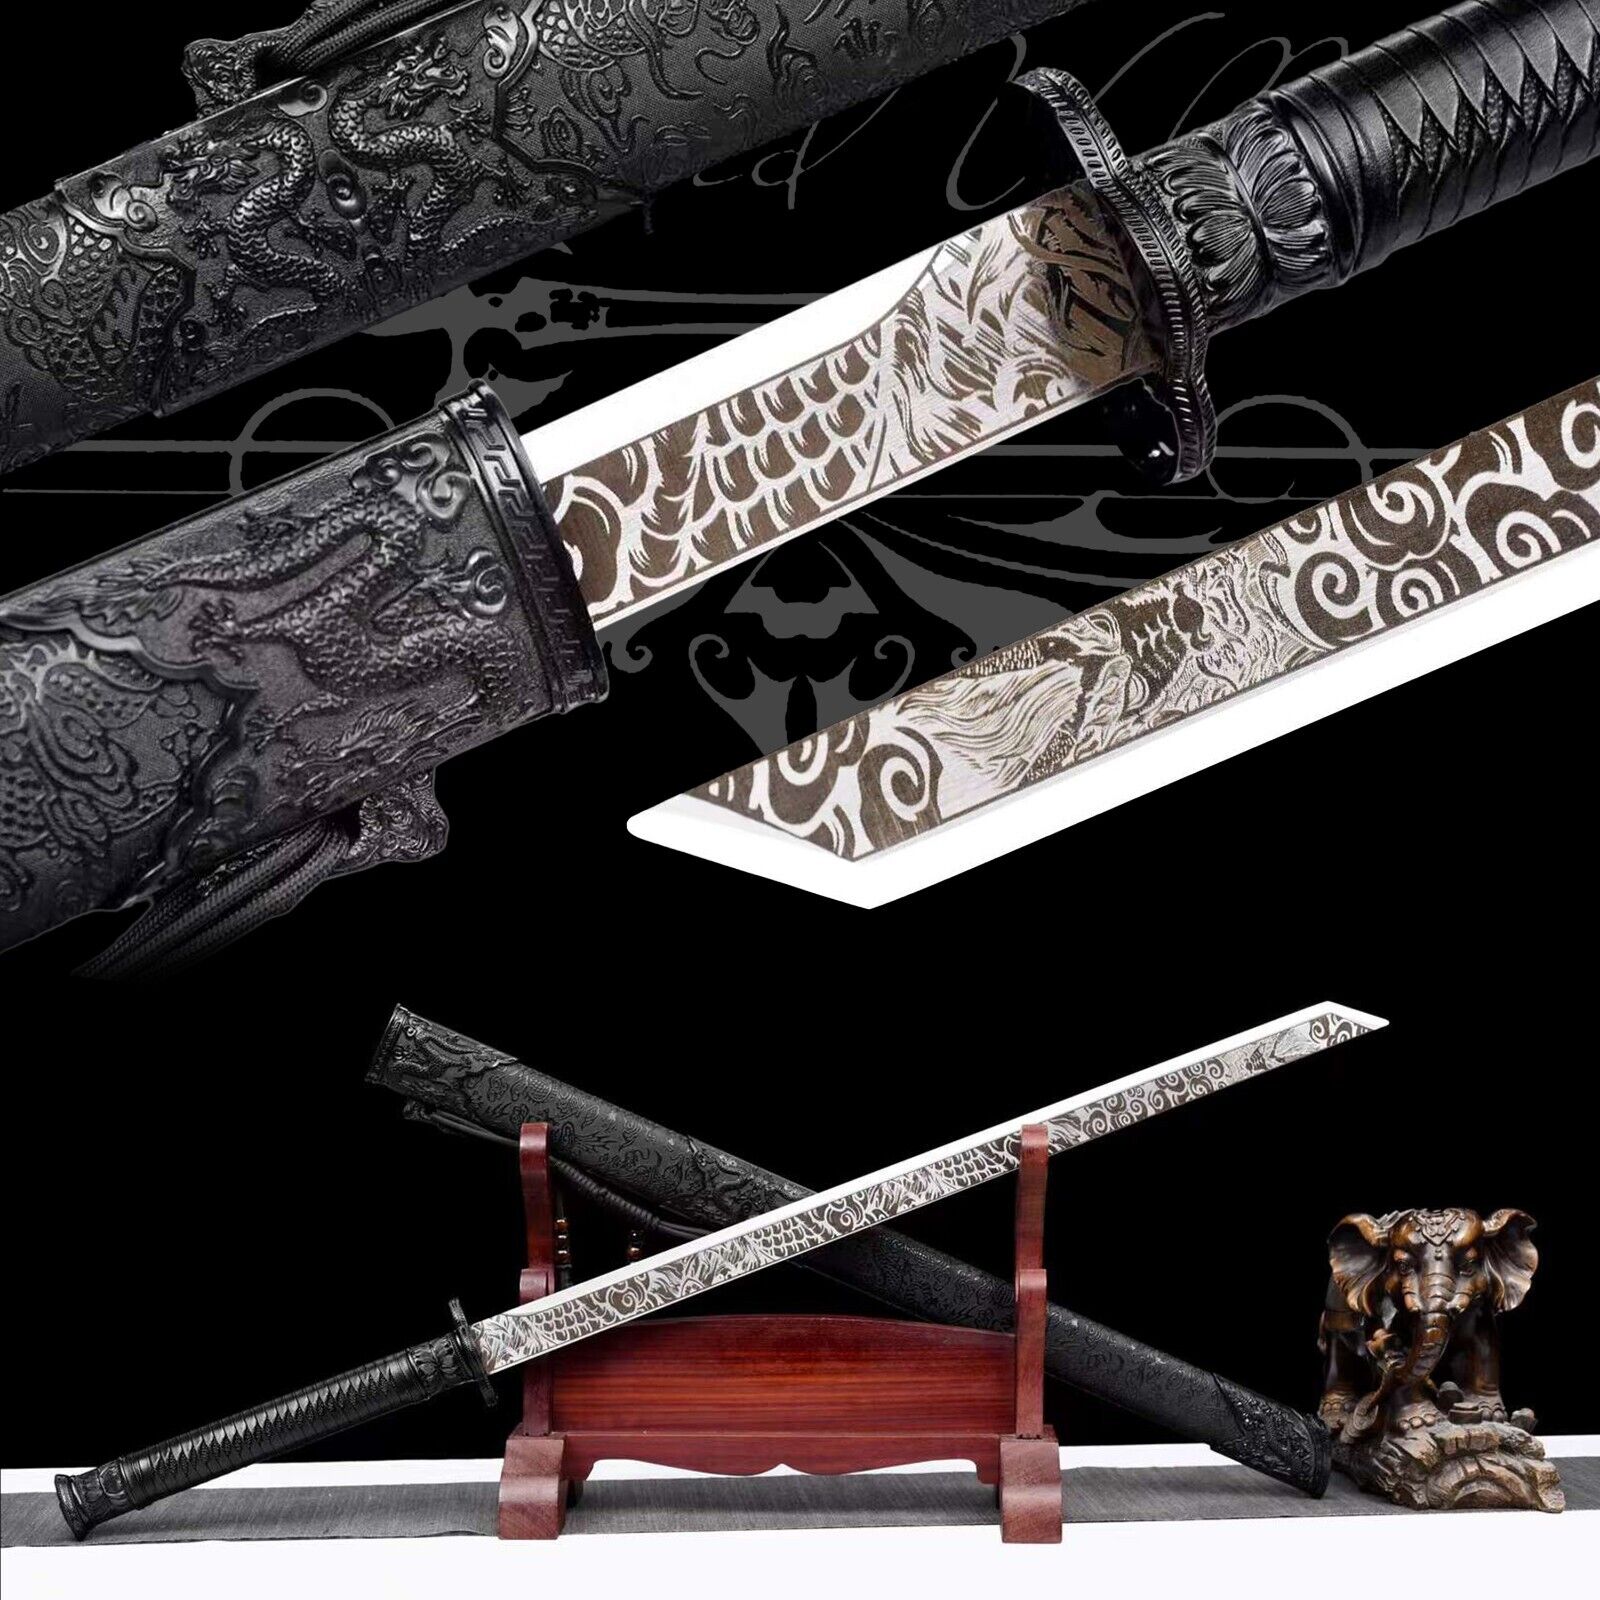 Handmade Katana/Black/Manganese Steel/Collectible Sword/Full Tang/Battle Ready